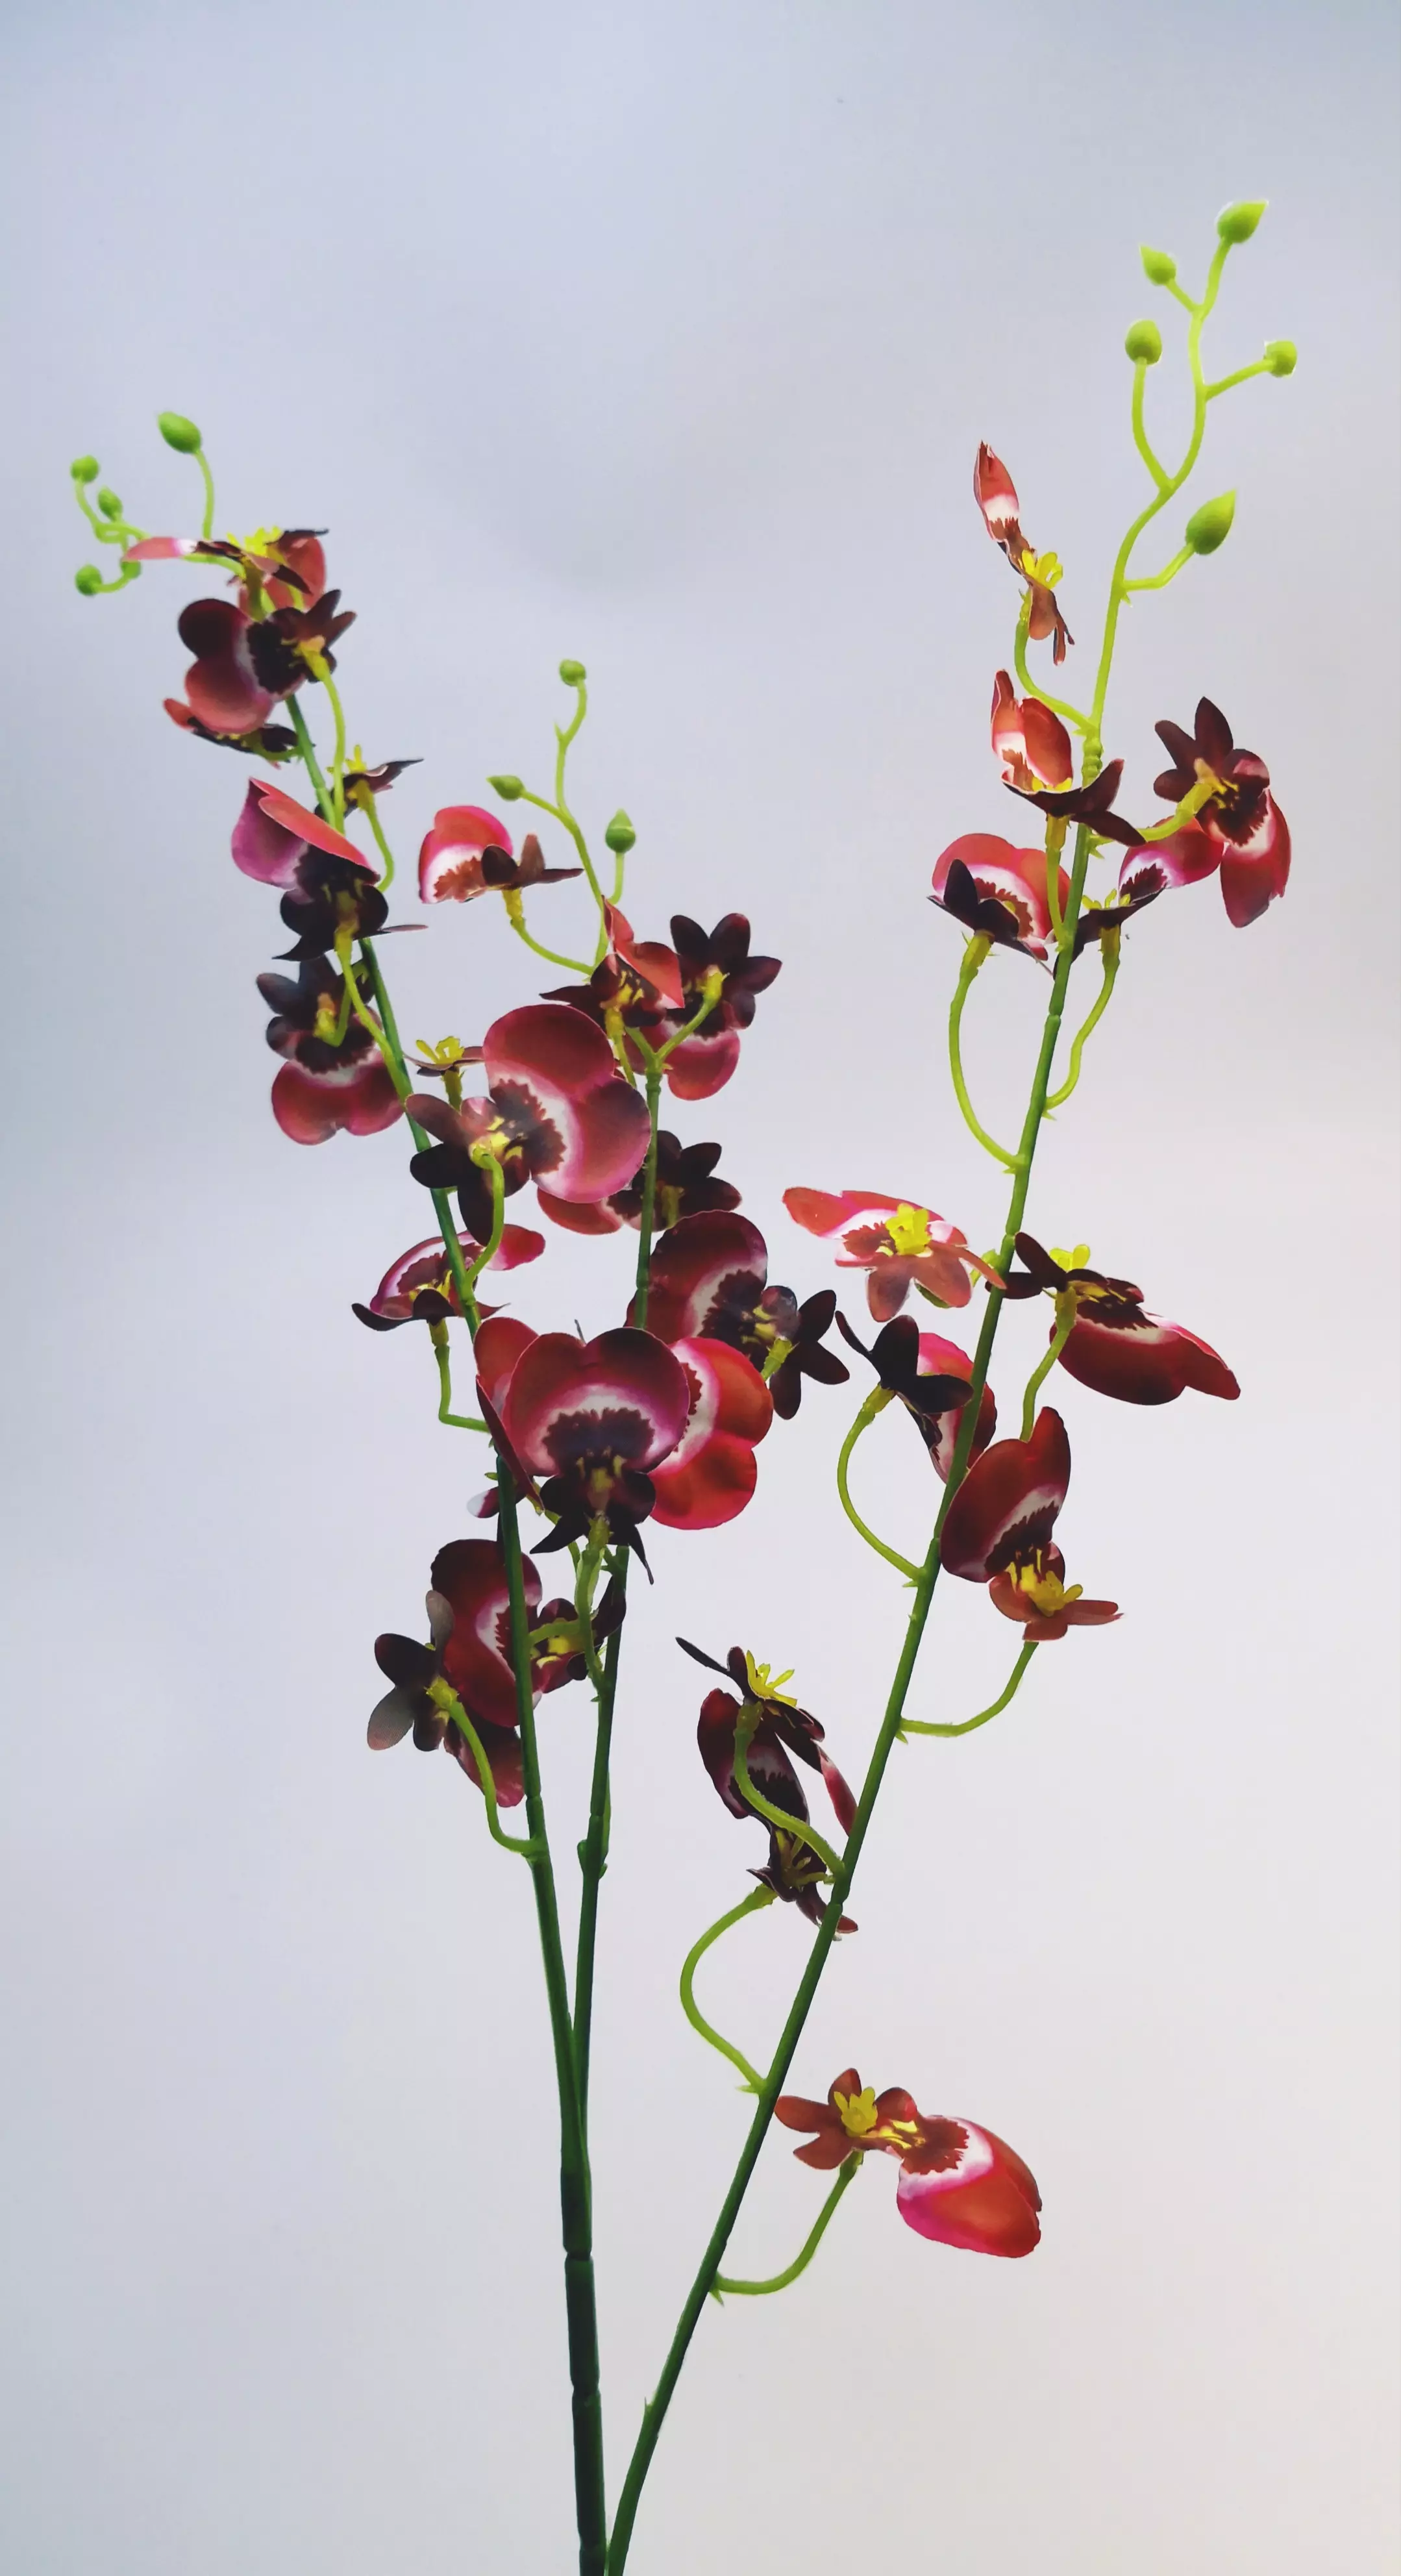 Gumi orchidea kis virágú 85 cm 32 virág 3-4 cm Bordó cirmos